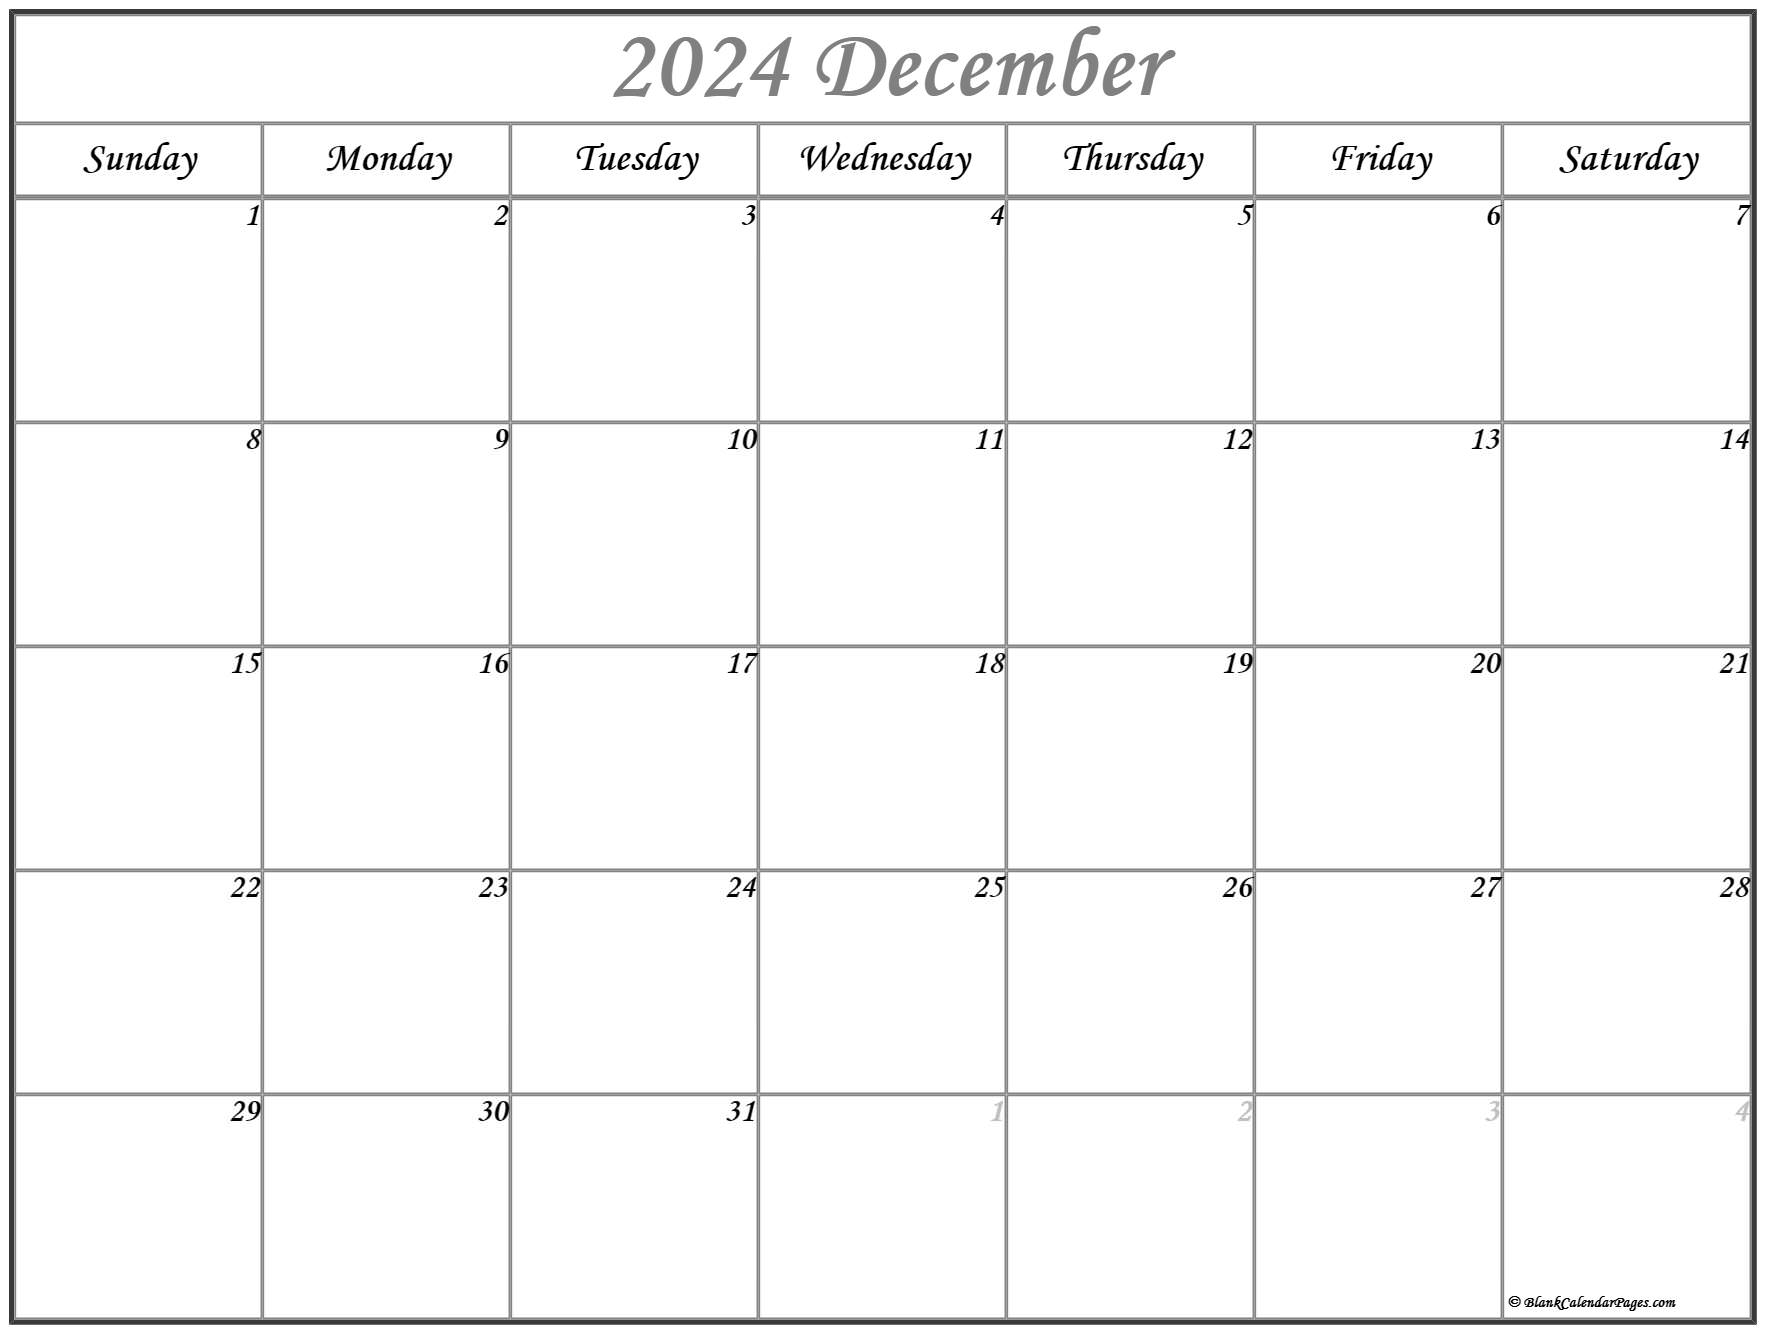 december-2022-blank-calendar-printable-printable-calendar-2023